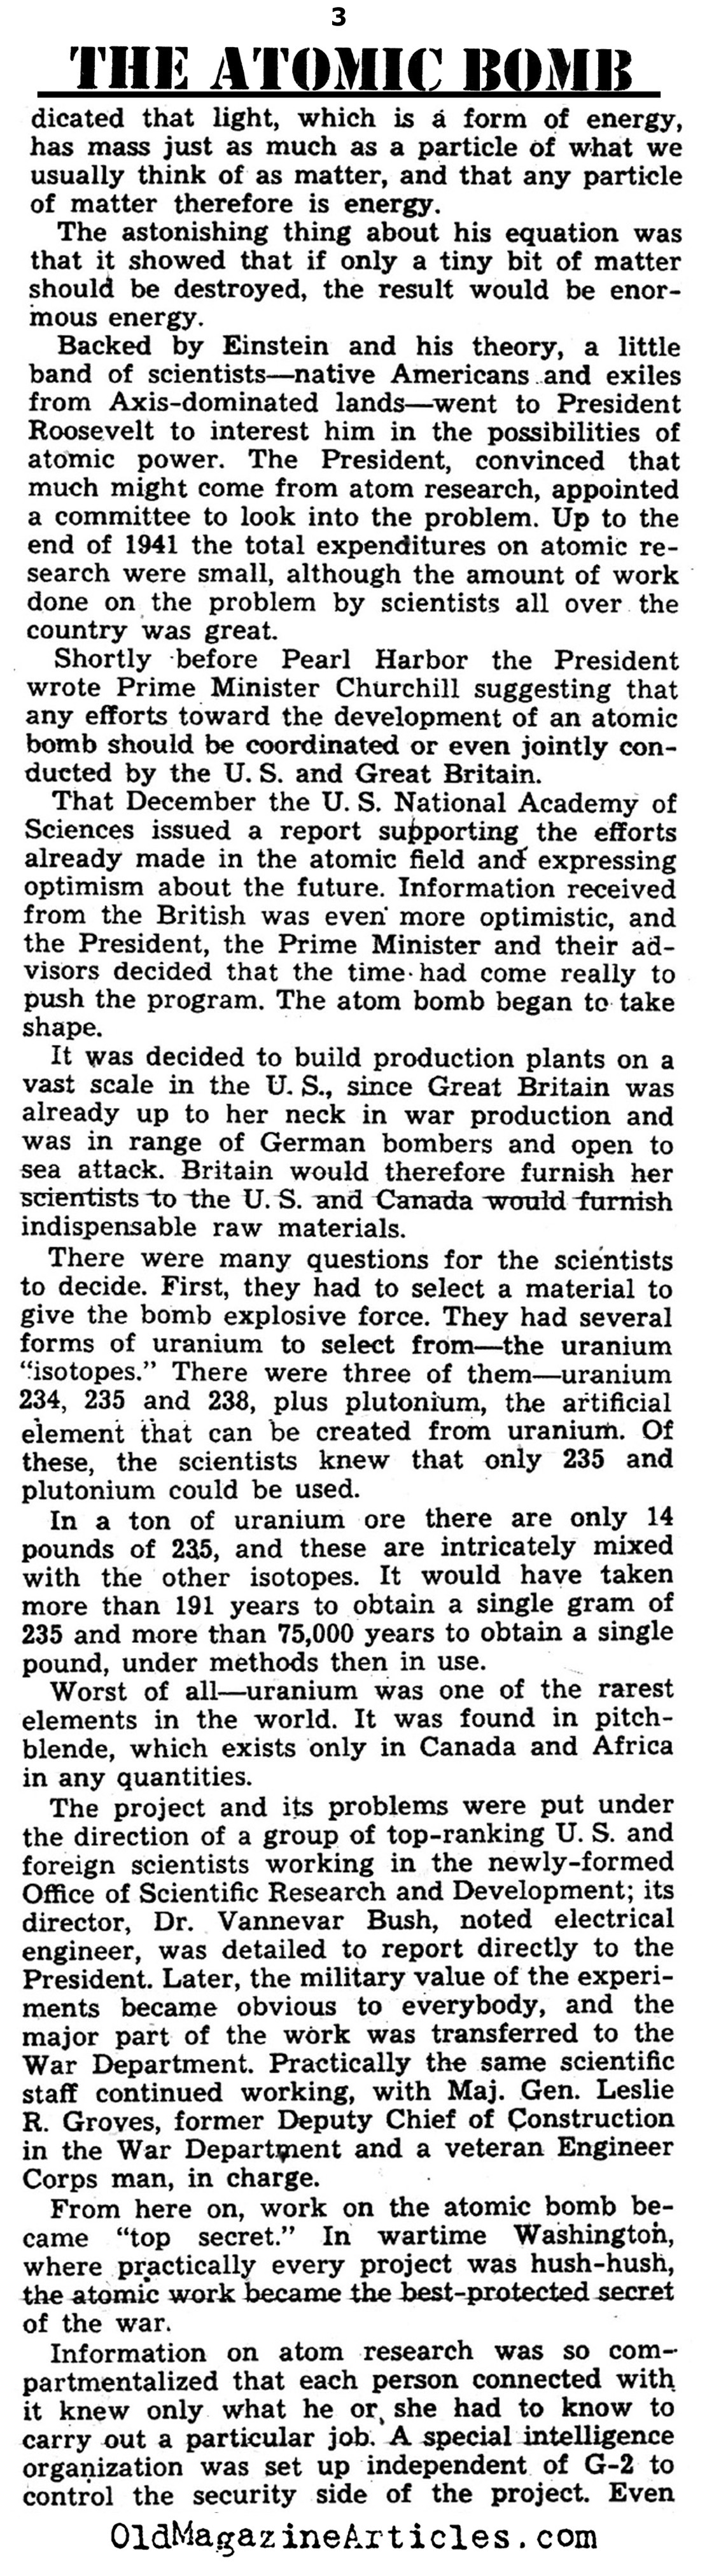 How The Atomic Bomb Was Developed (Yank Magazine, 1945)